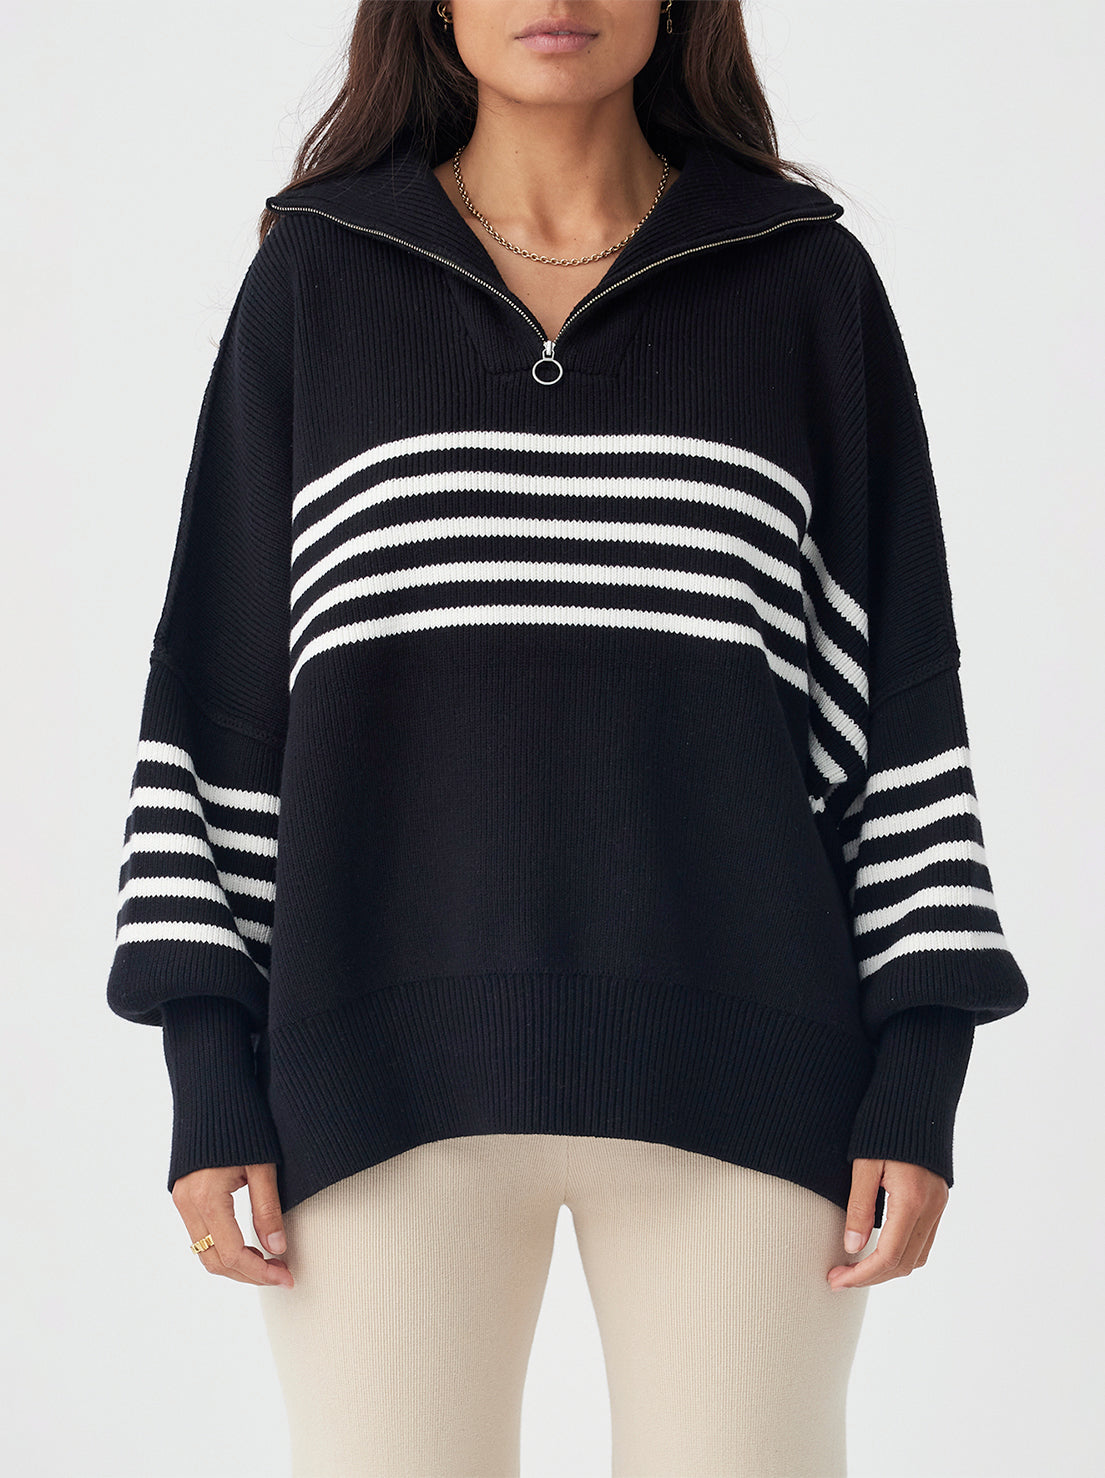 Arcaa Movement - London Zip Stripe Sweater - Black & Cream